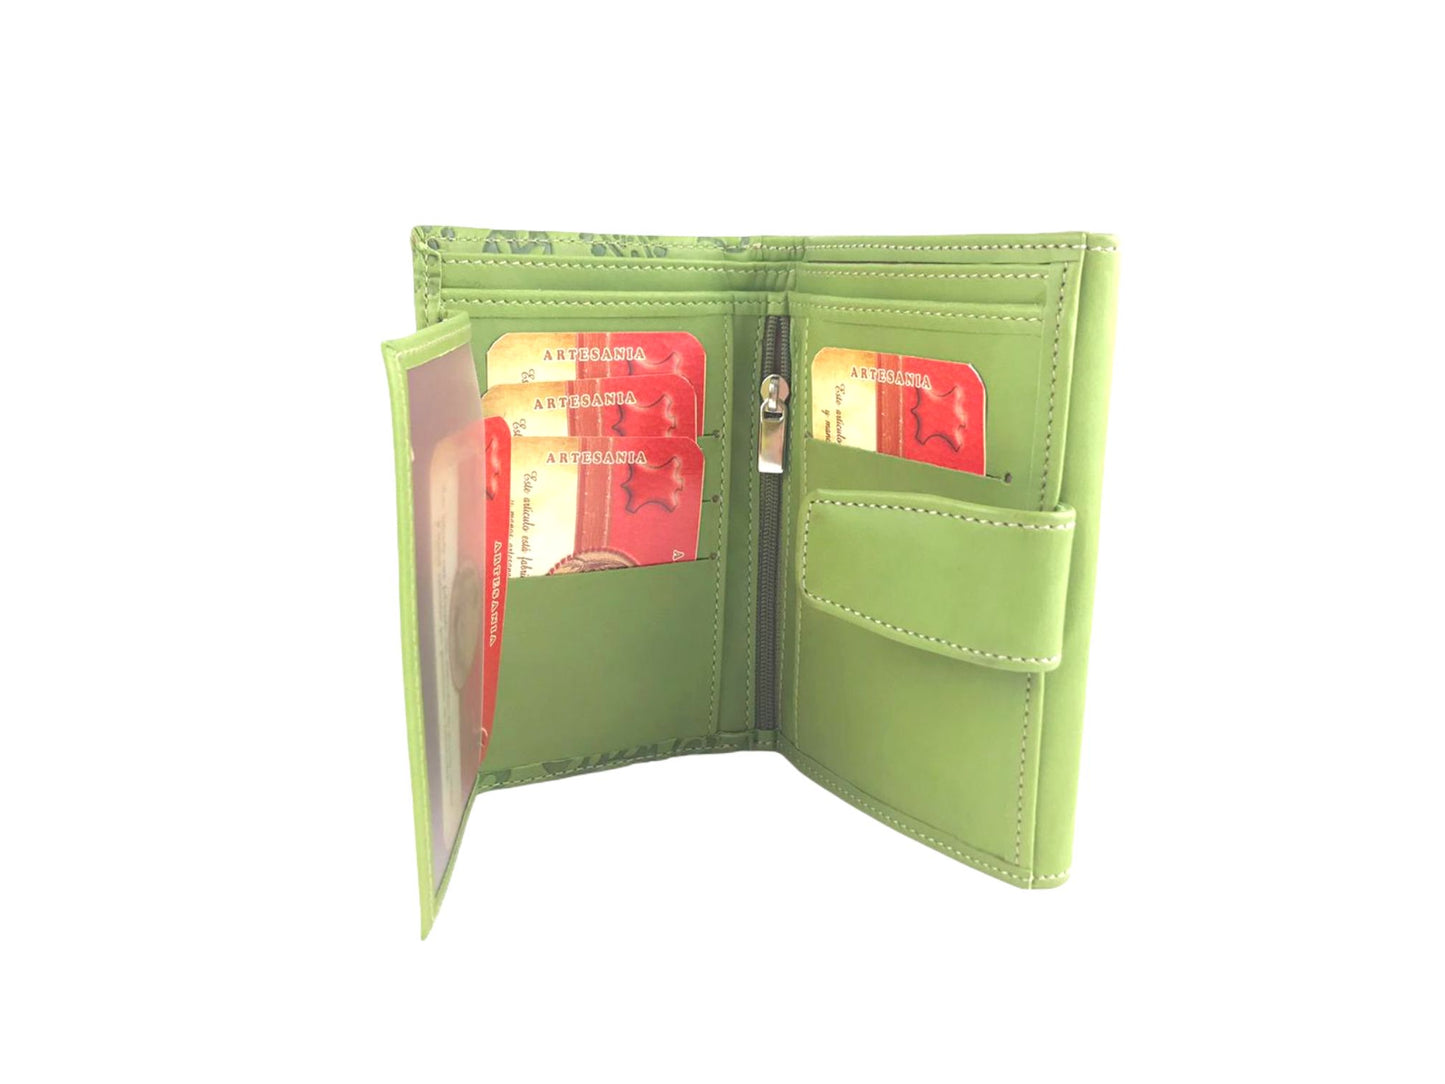 DAPONTE | Milan wallet, card holder and purse